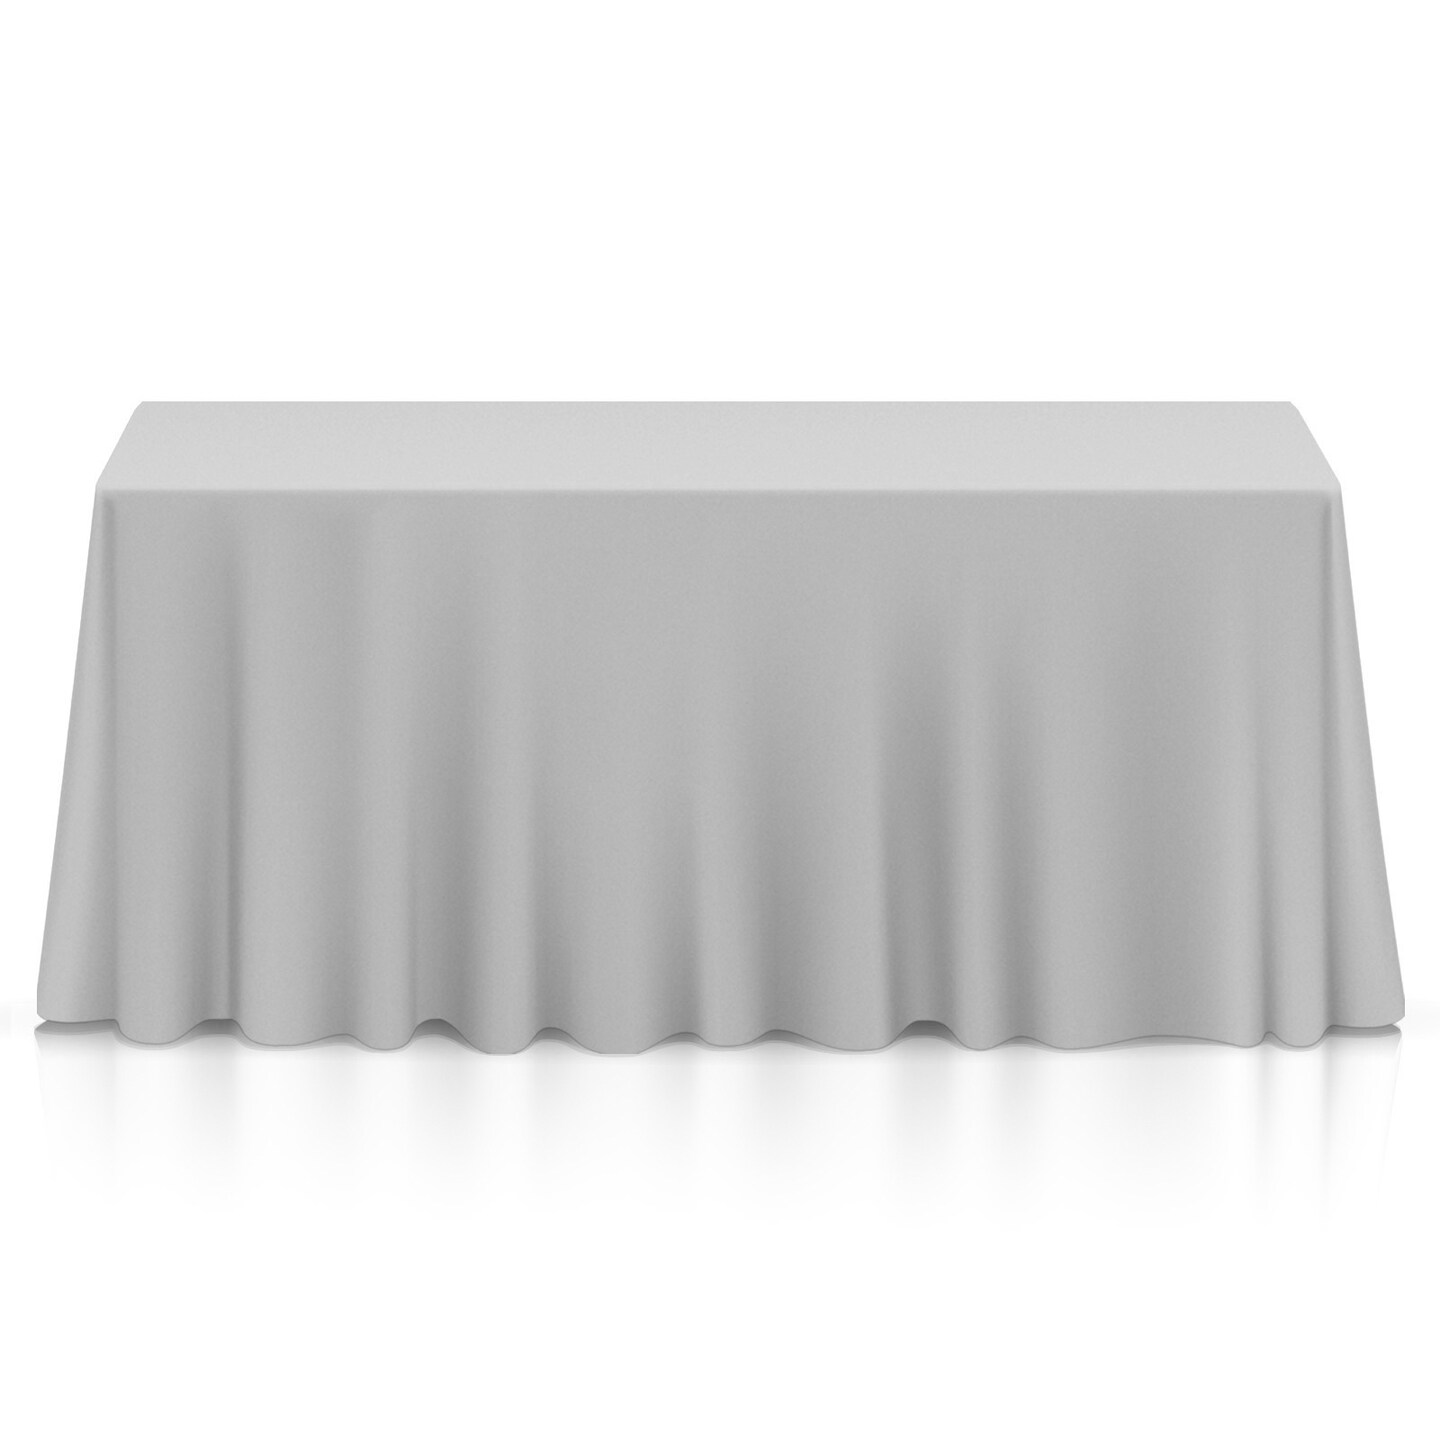 Lann's Linens - Premium Tablecloth for Wedding / Banquet / Restaurant - Rectangular Polyester Fabric Table Cloth